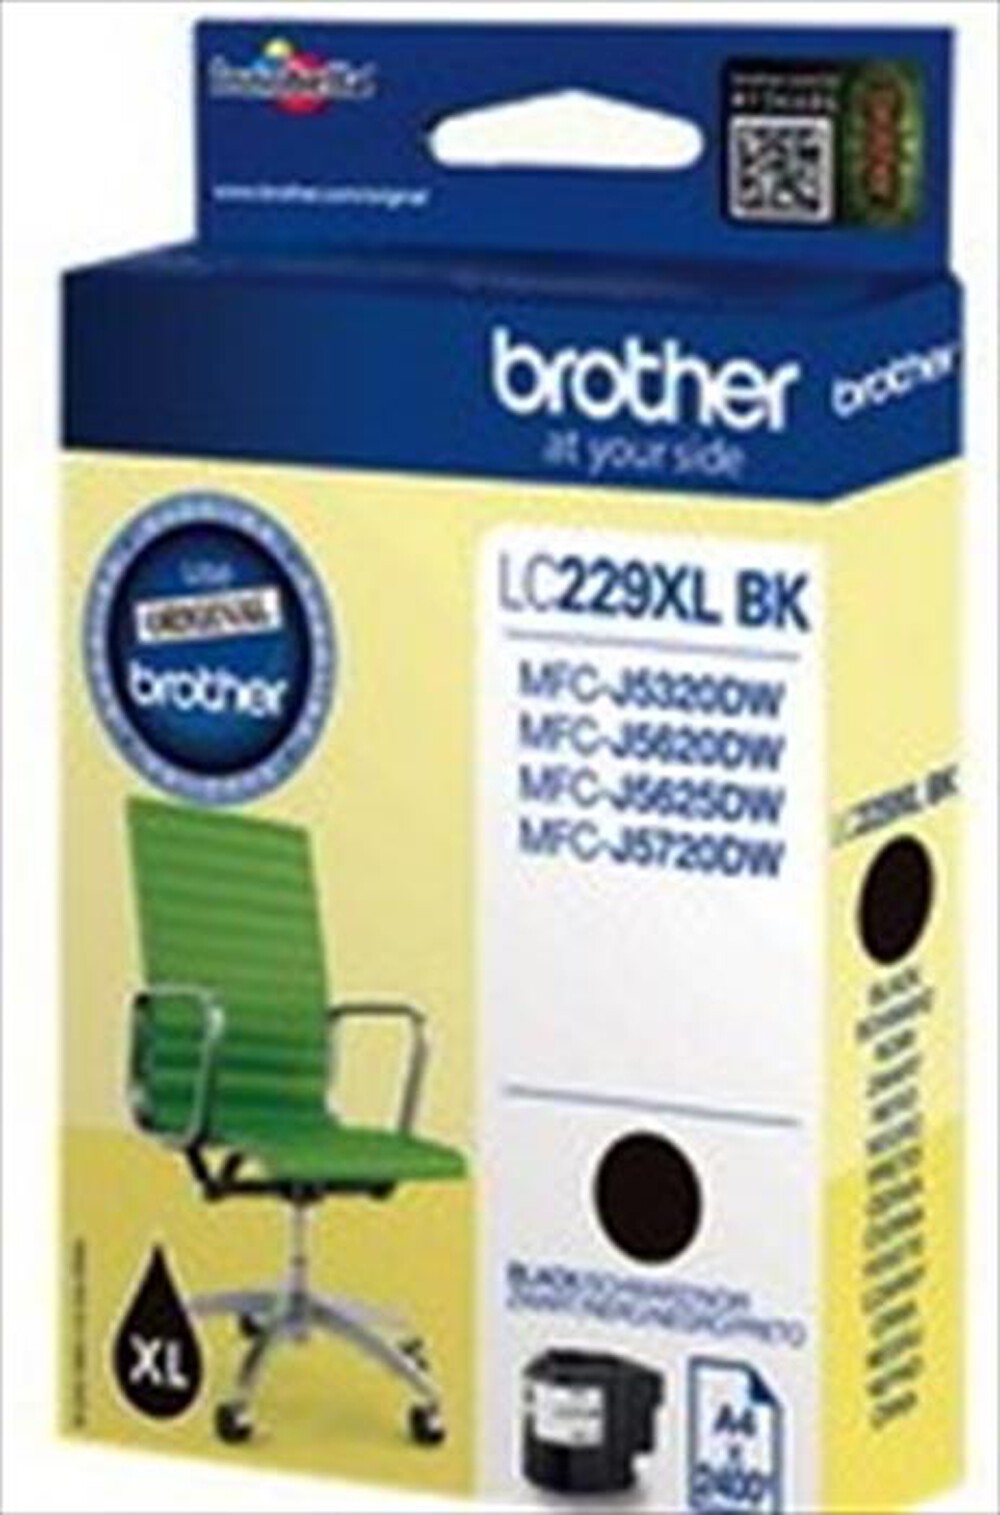 "BROTHER - LC229XLBK"